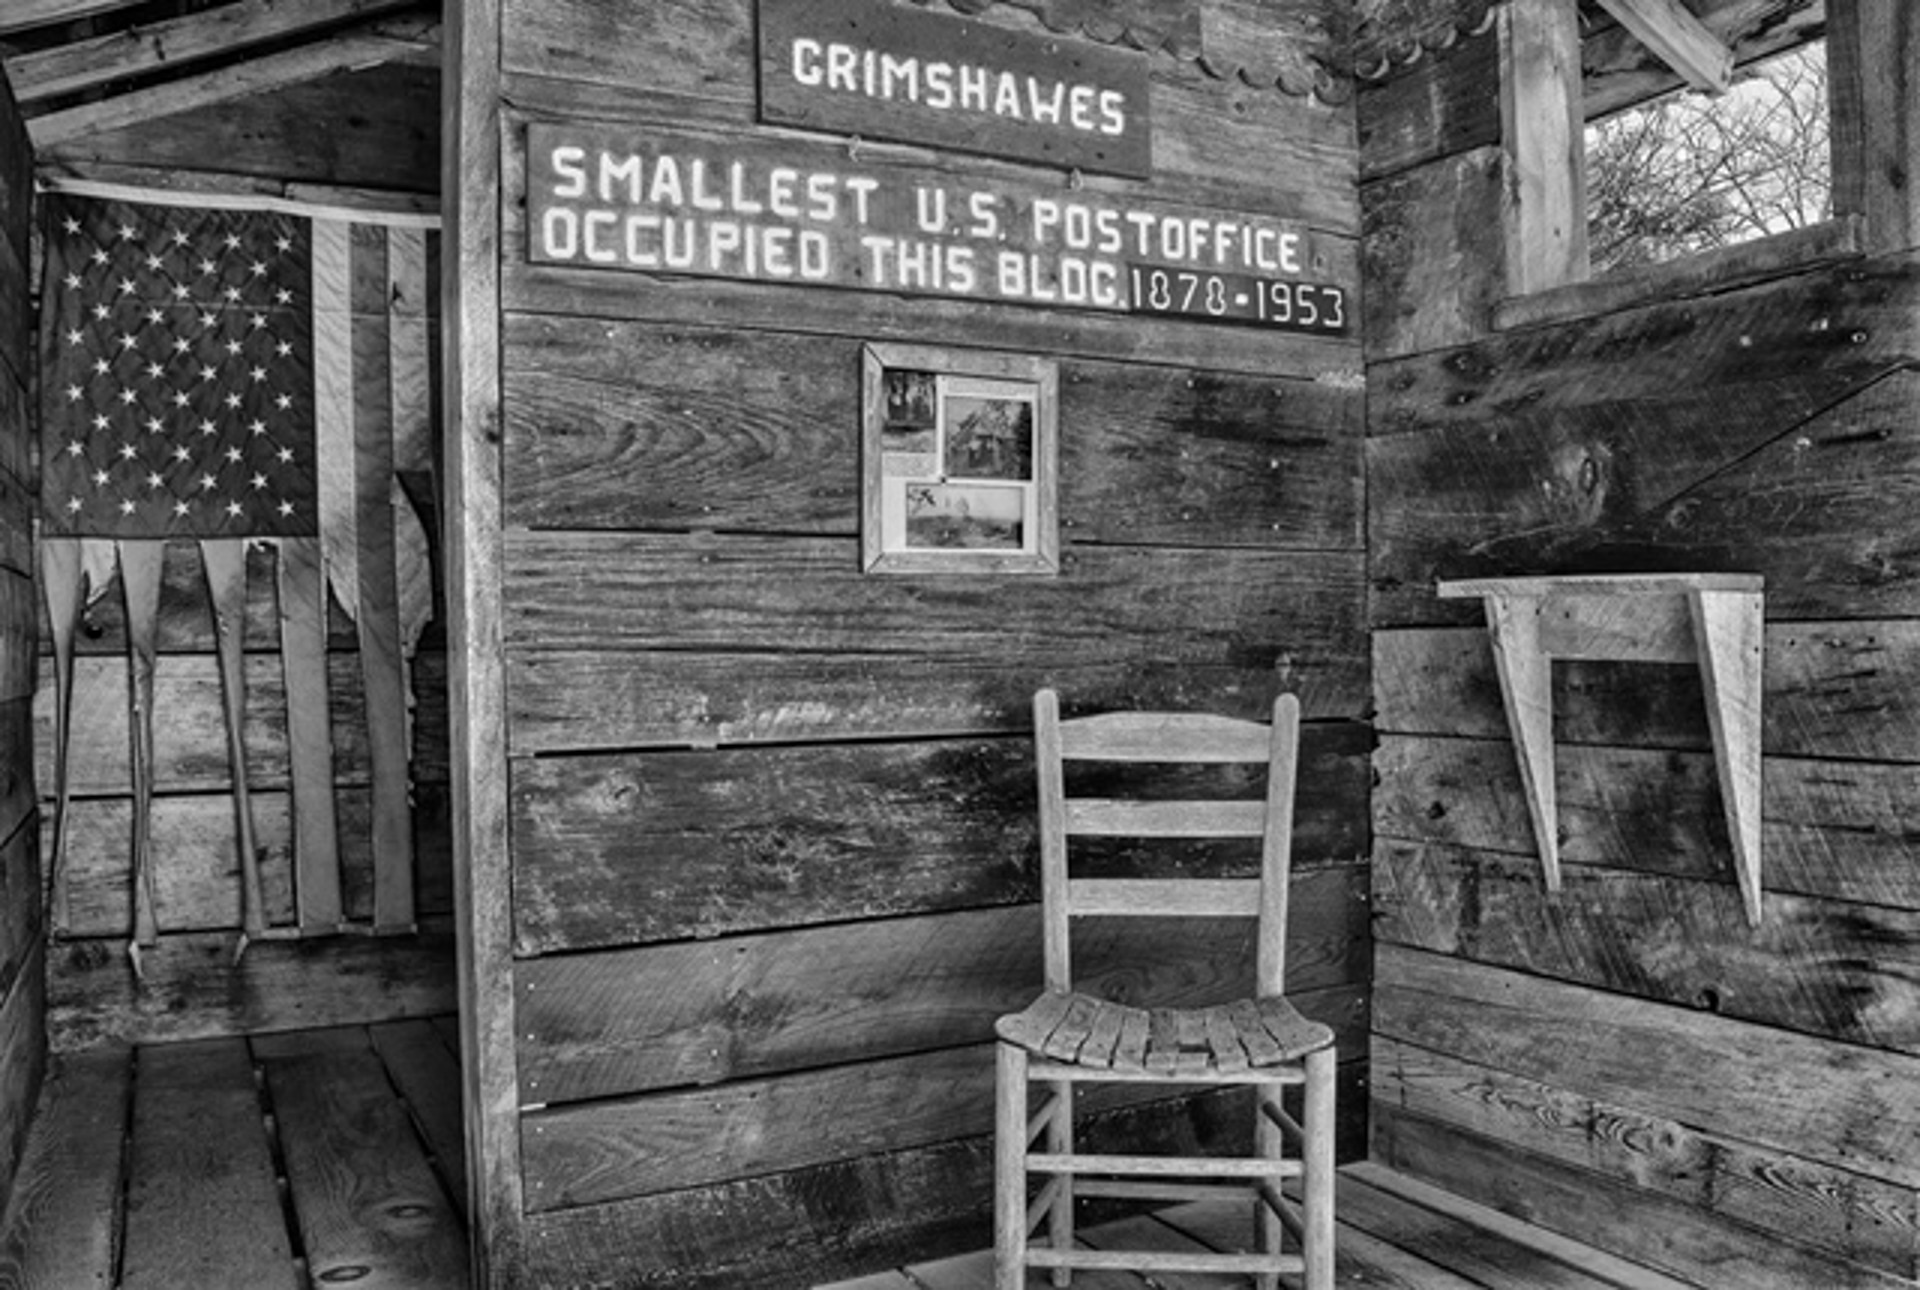 Grimshaw's Post Office by Barry Vangrov